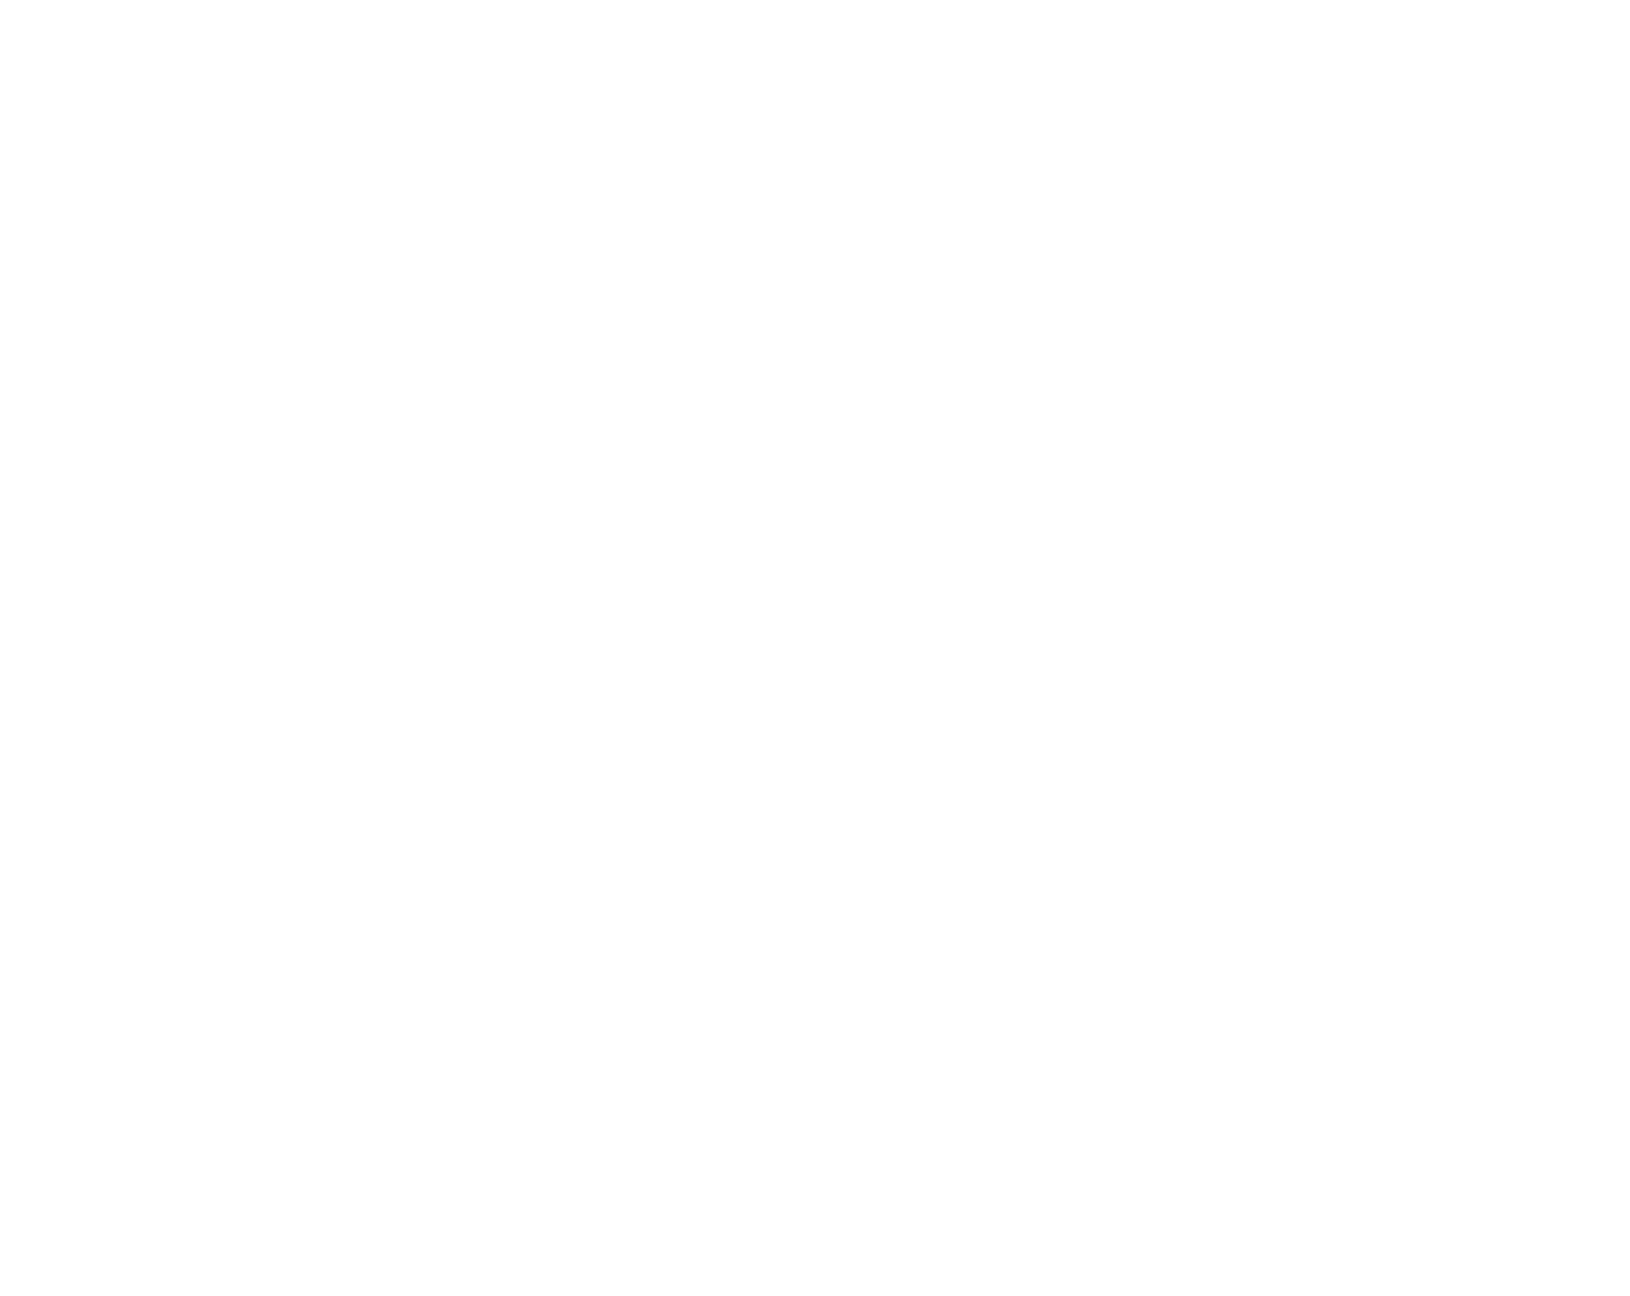 Logo Chisholm at Tavolo Park in Fort Worth, Texas